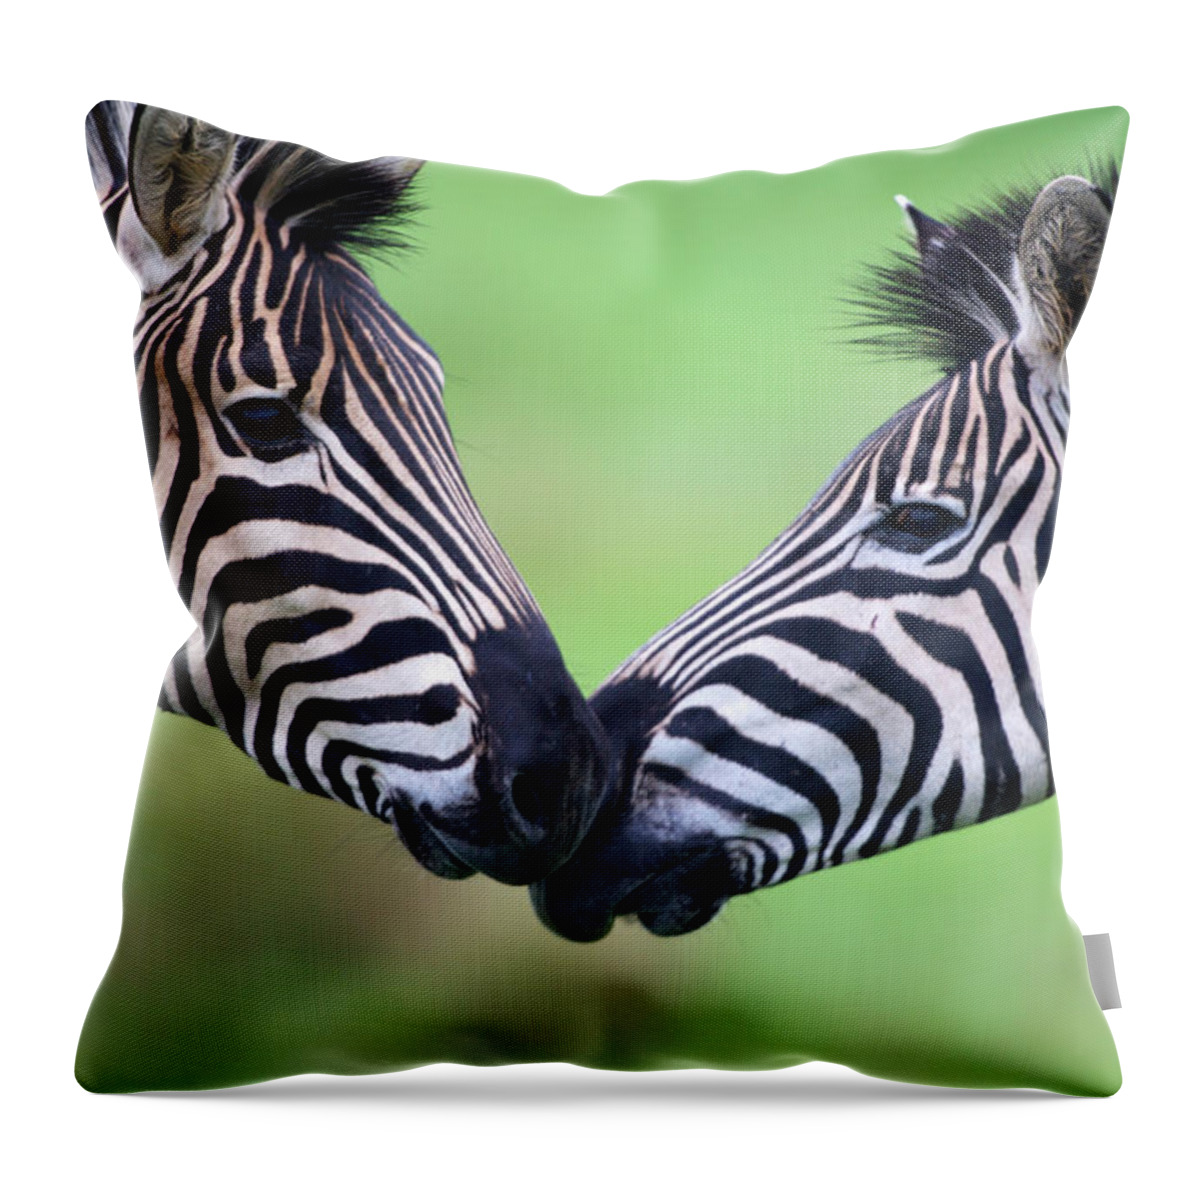 Plains Zebra Throw Pillow featuring the photograph Plains Zebra Equus Quagga Pair by Heinrich Van Den Berg